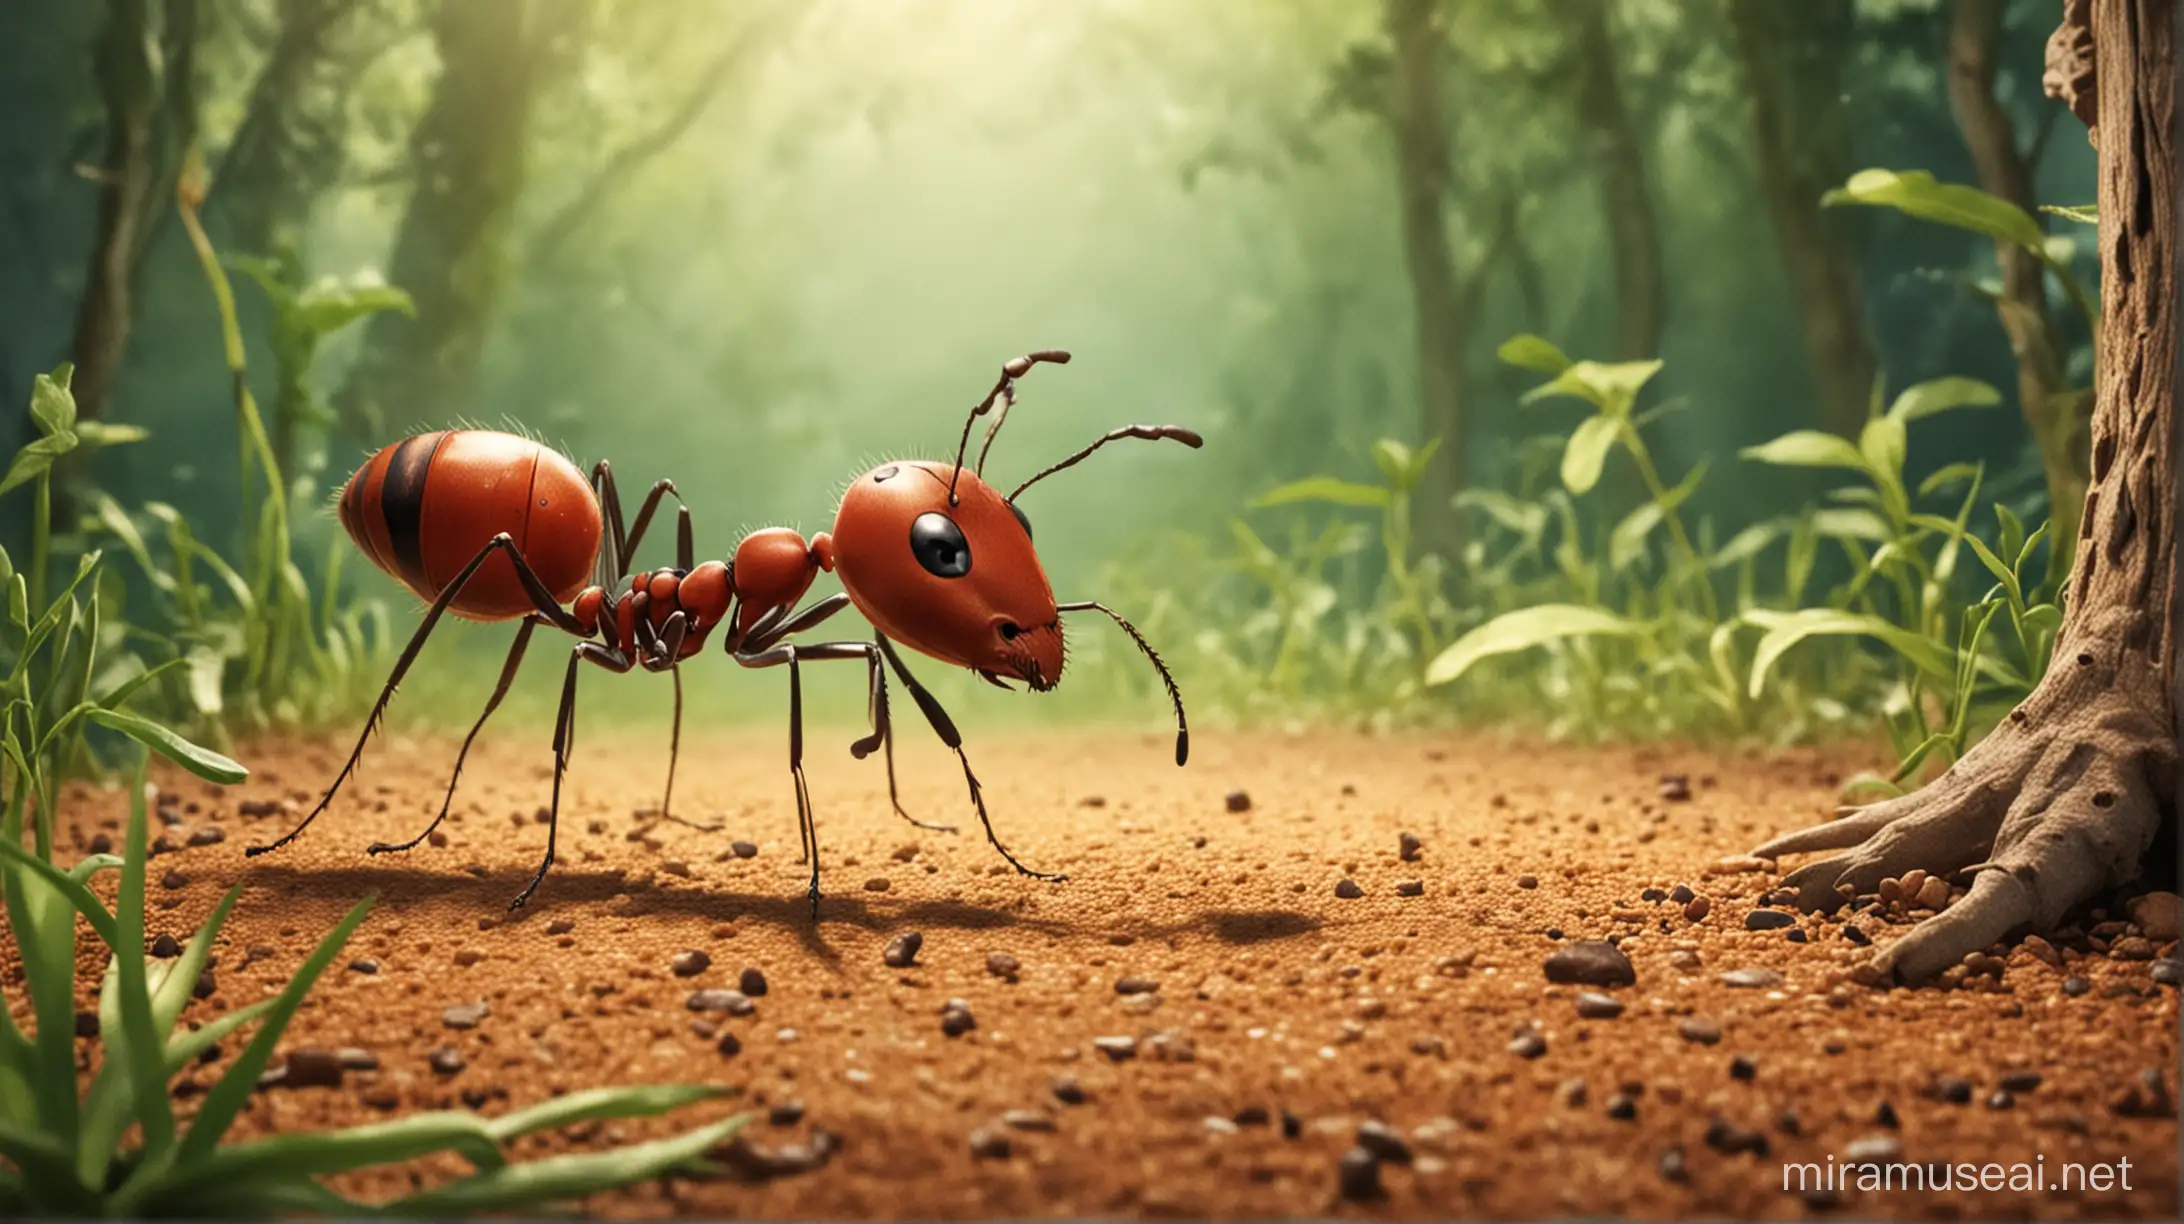 Adventurous Ants Explore a Colorful World